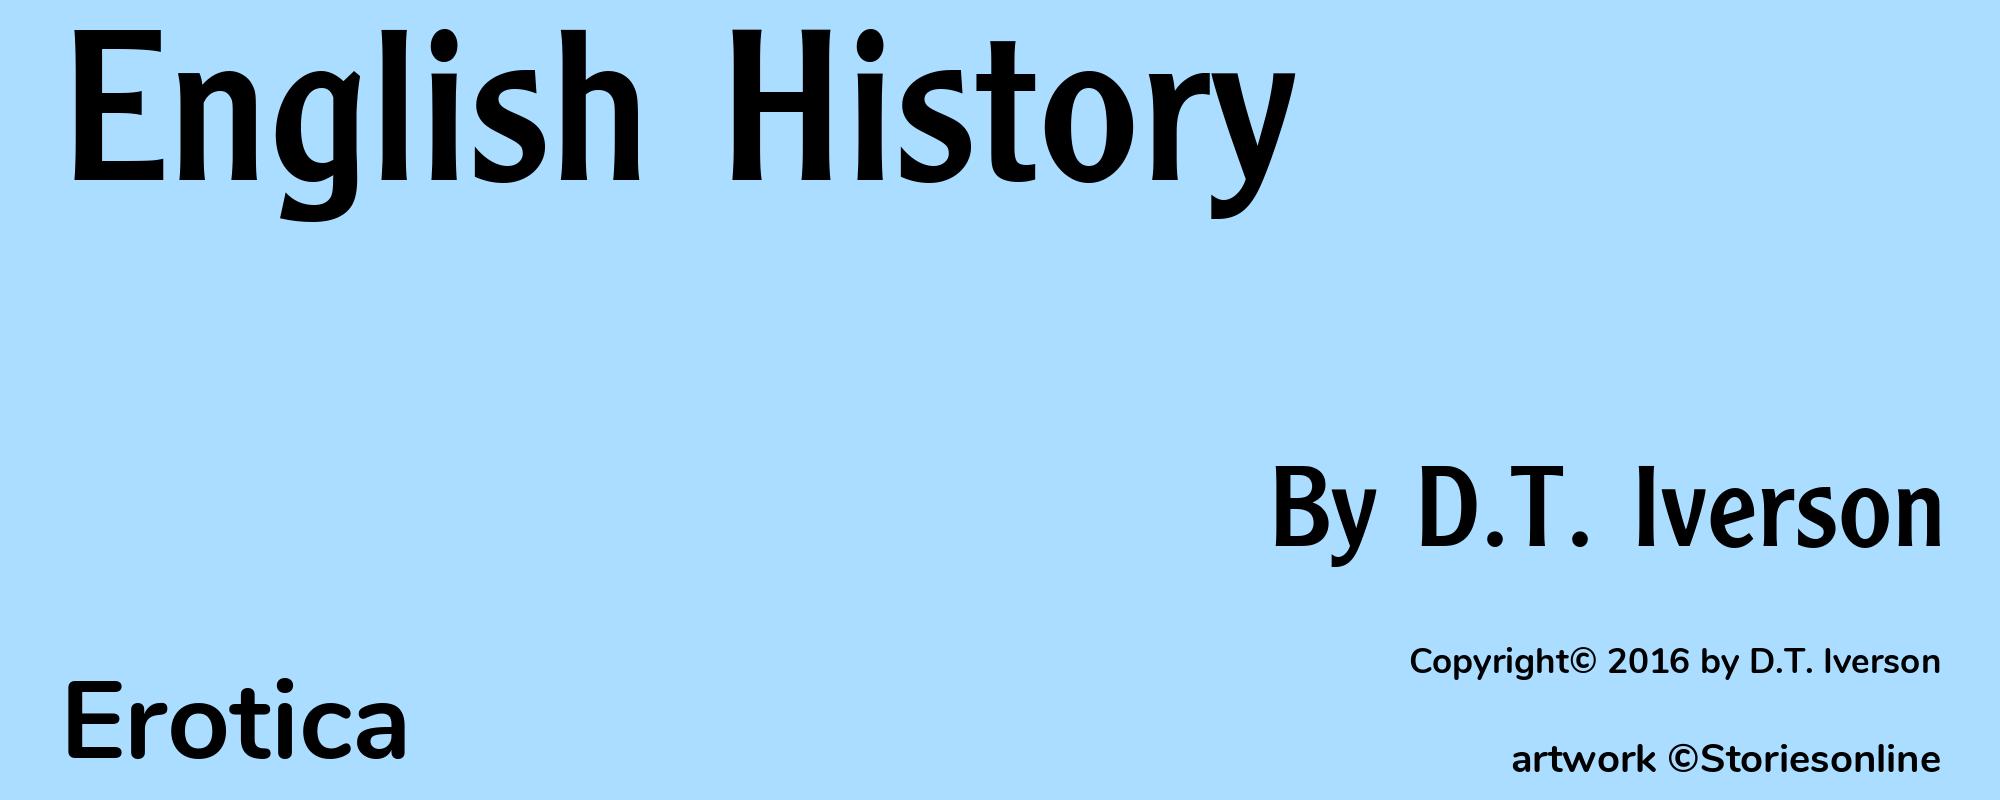 English History - Cover